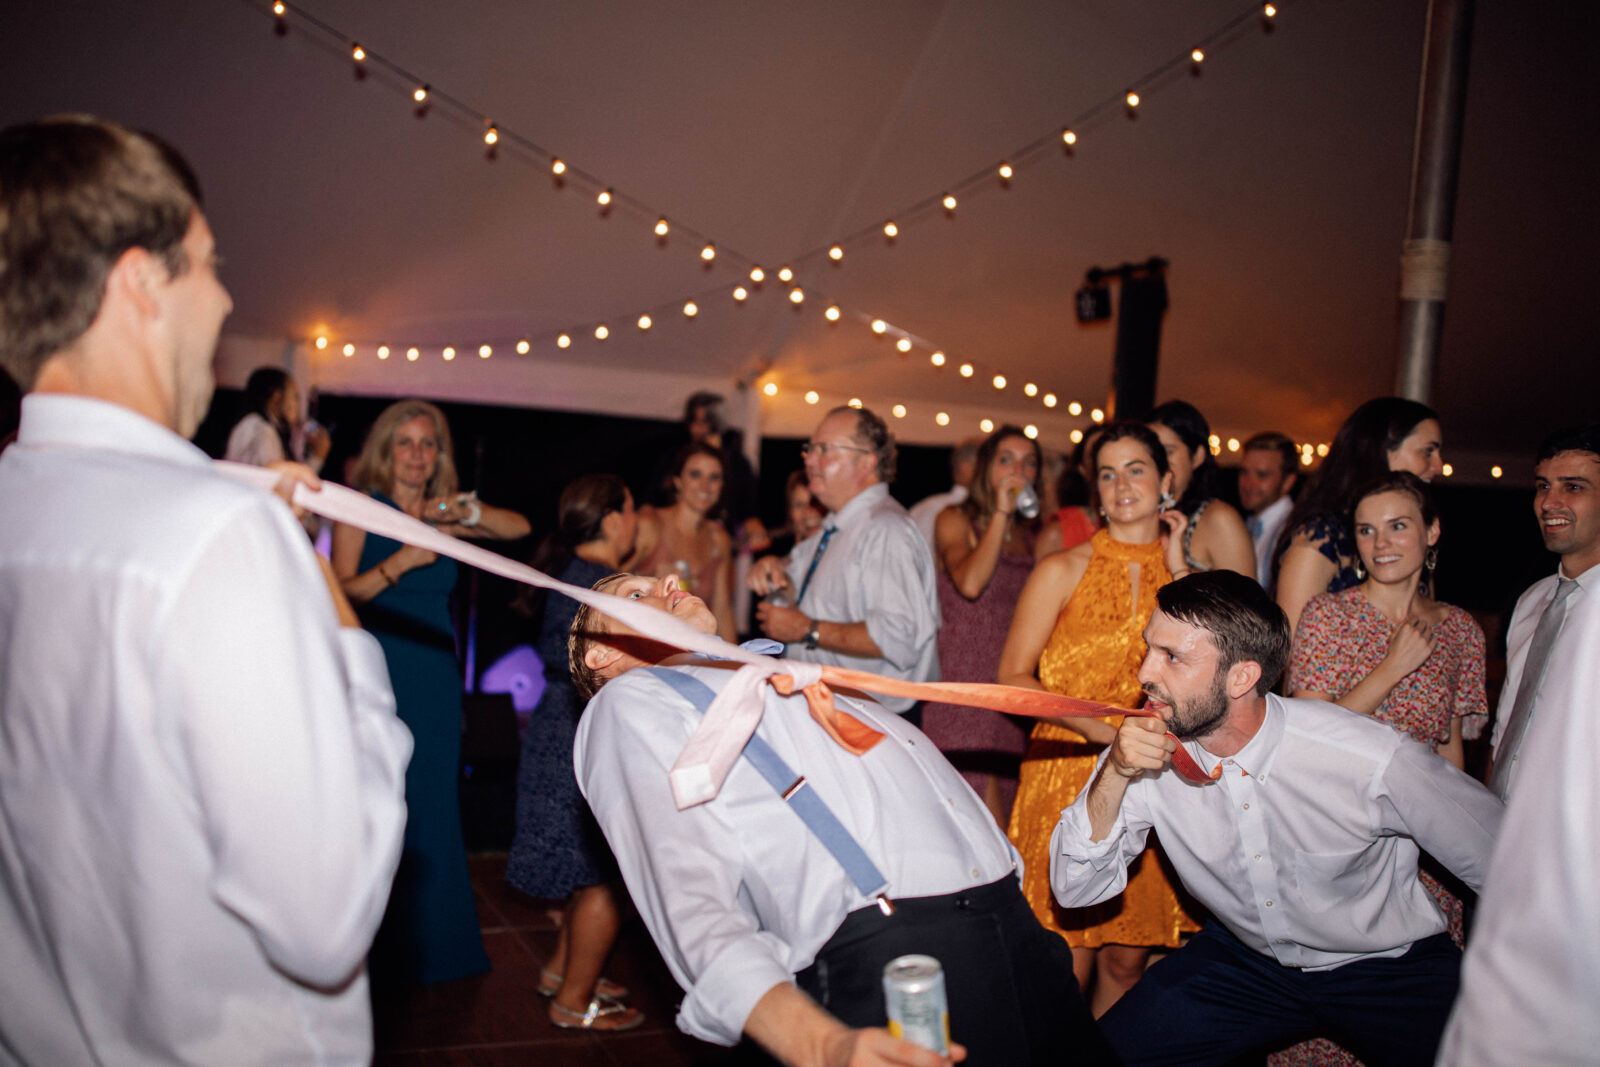 Fun dancing wedding reception photos with direct flash and colorful editing. Funny wedding reception dancing photos. Tie limbo